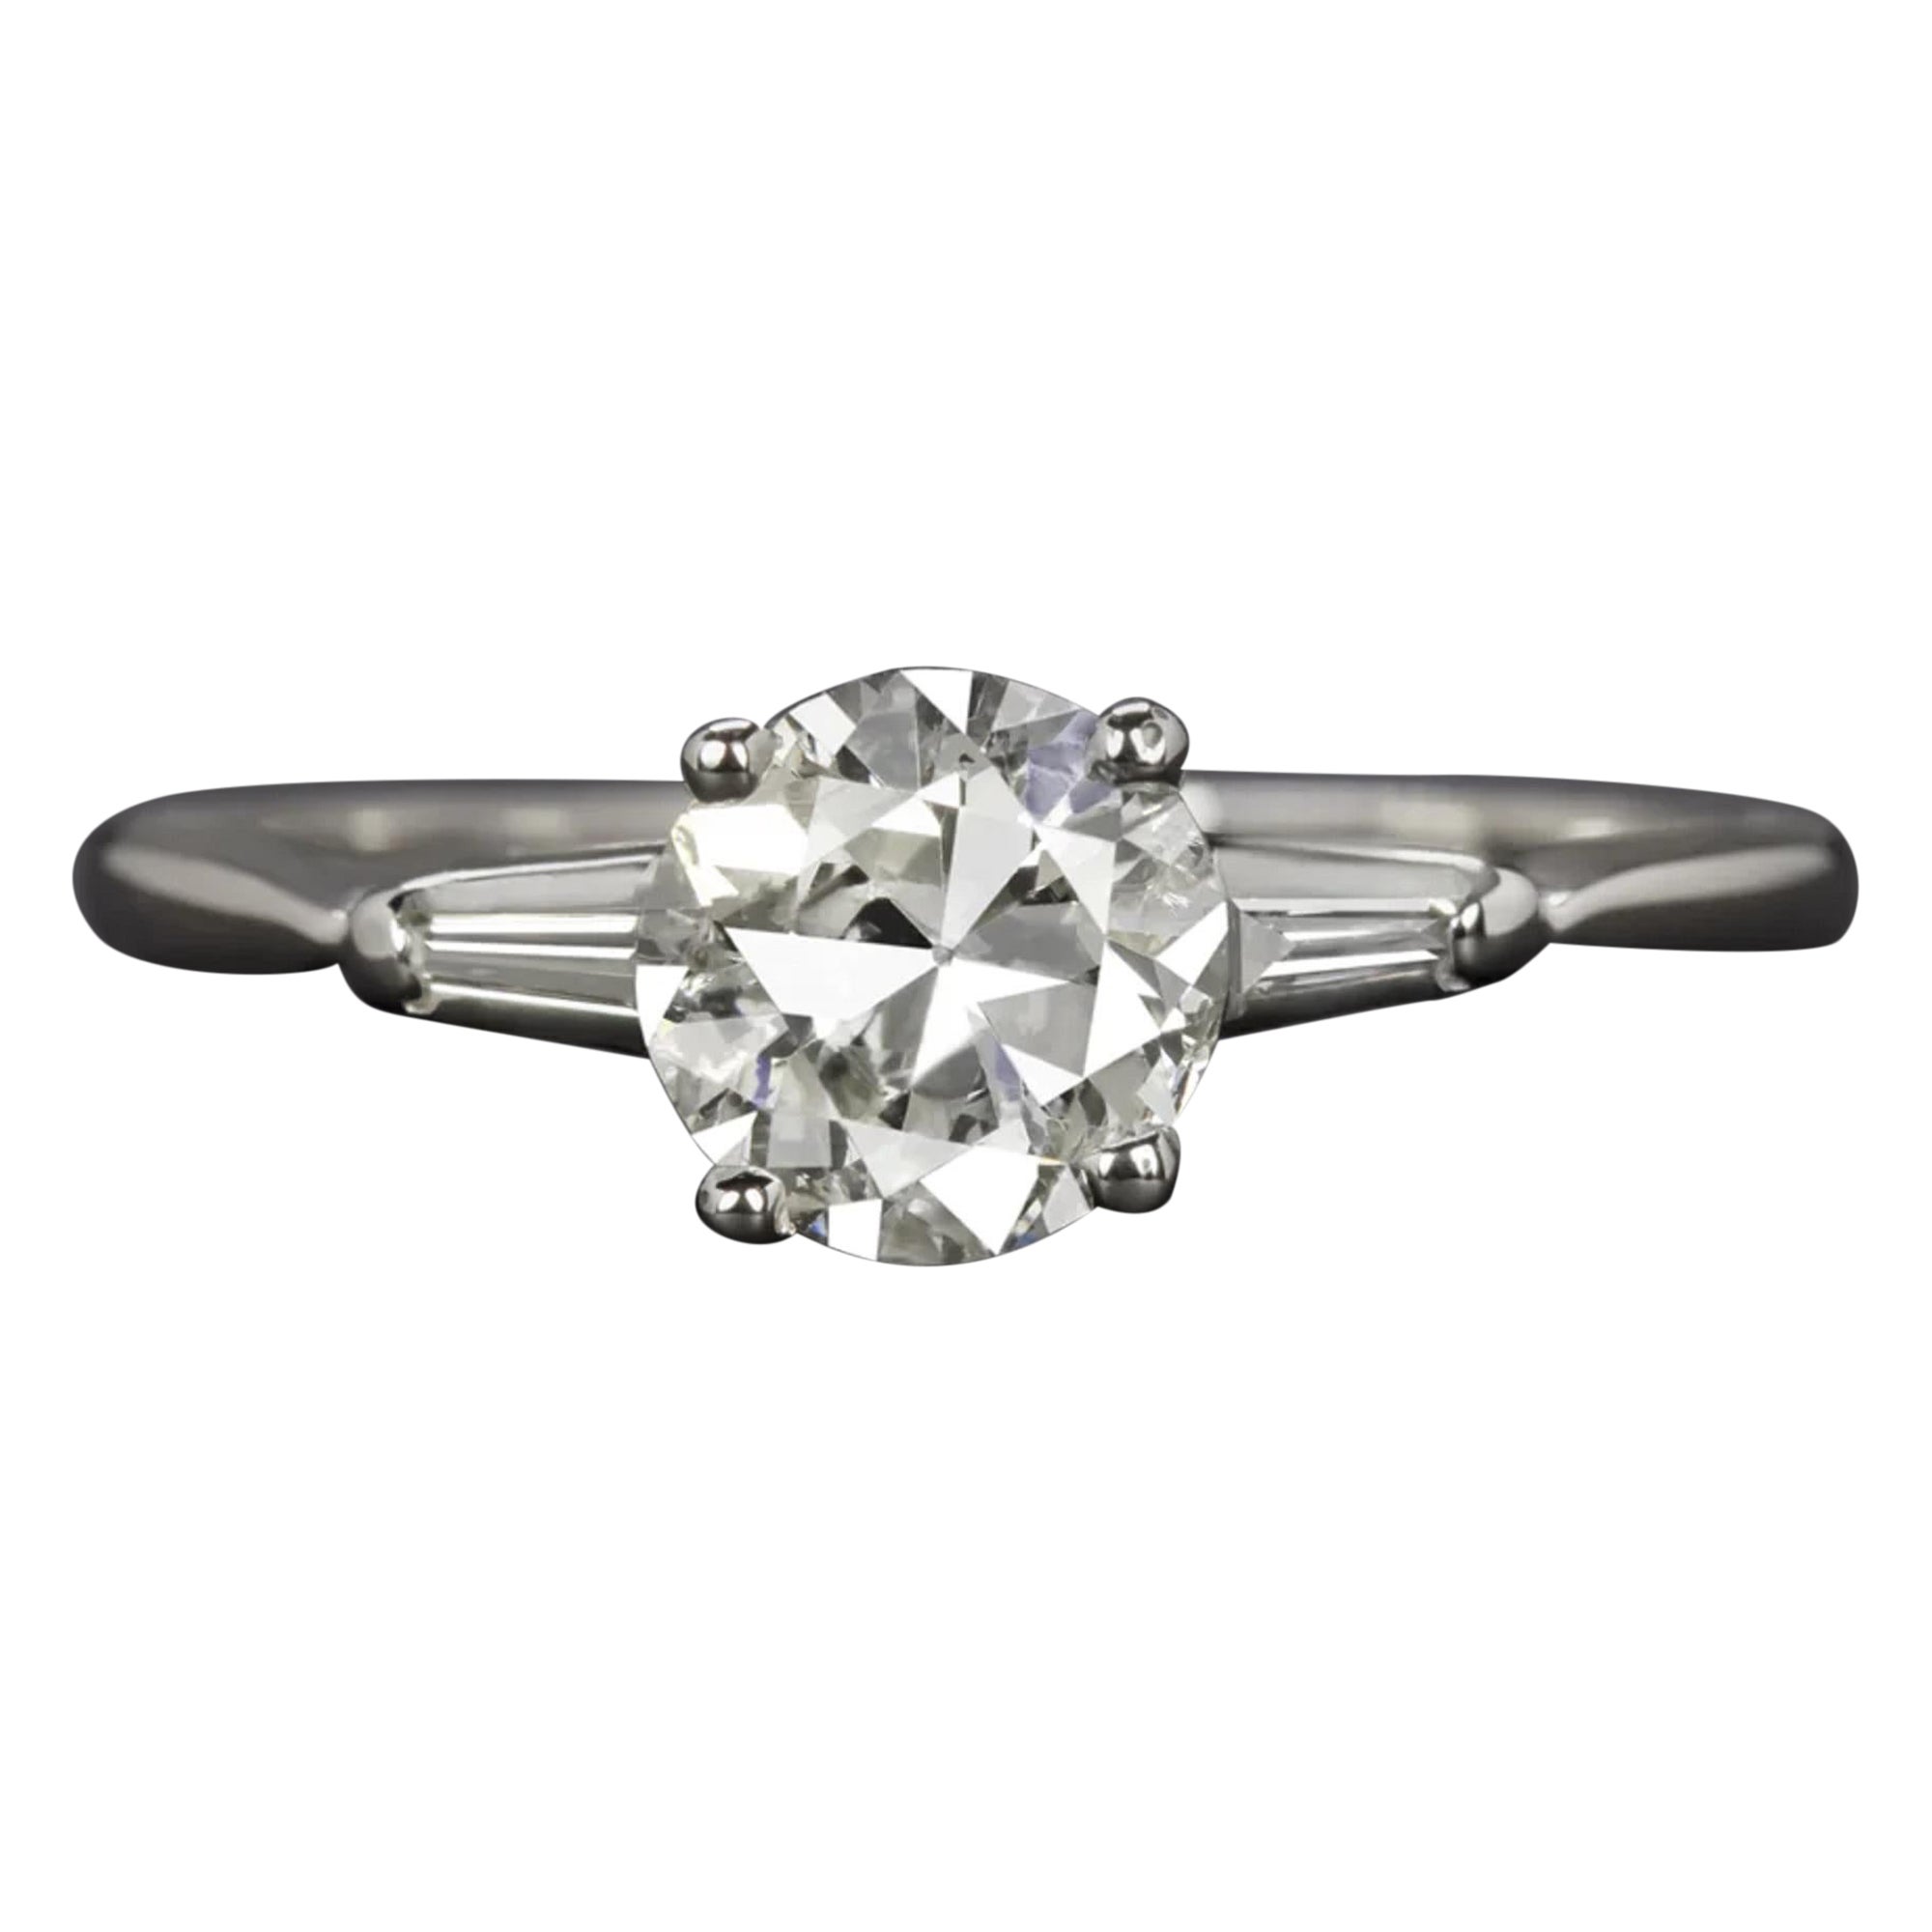 Authentic Art Deco Vintage Platinum Diamond Solitaire Engagement Ring